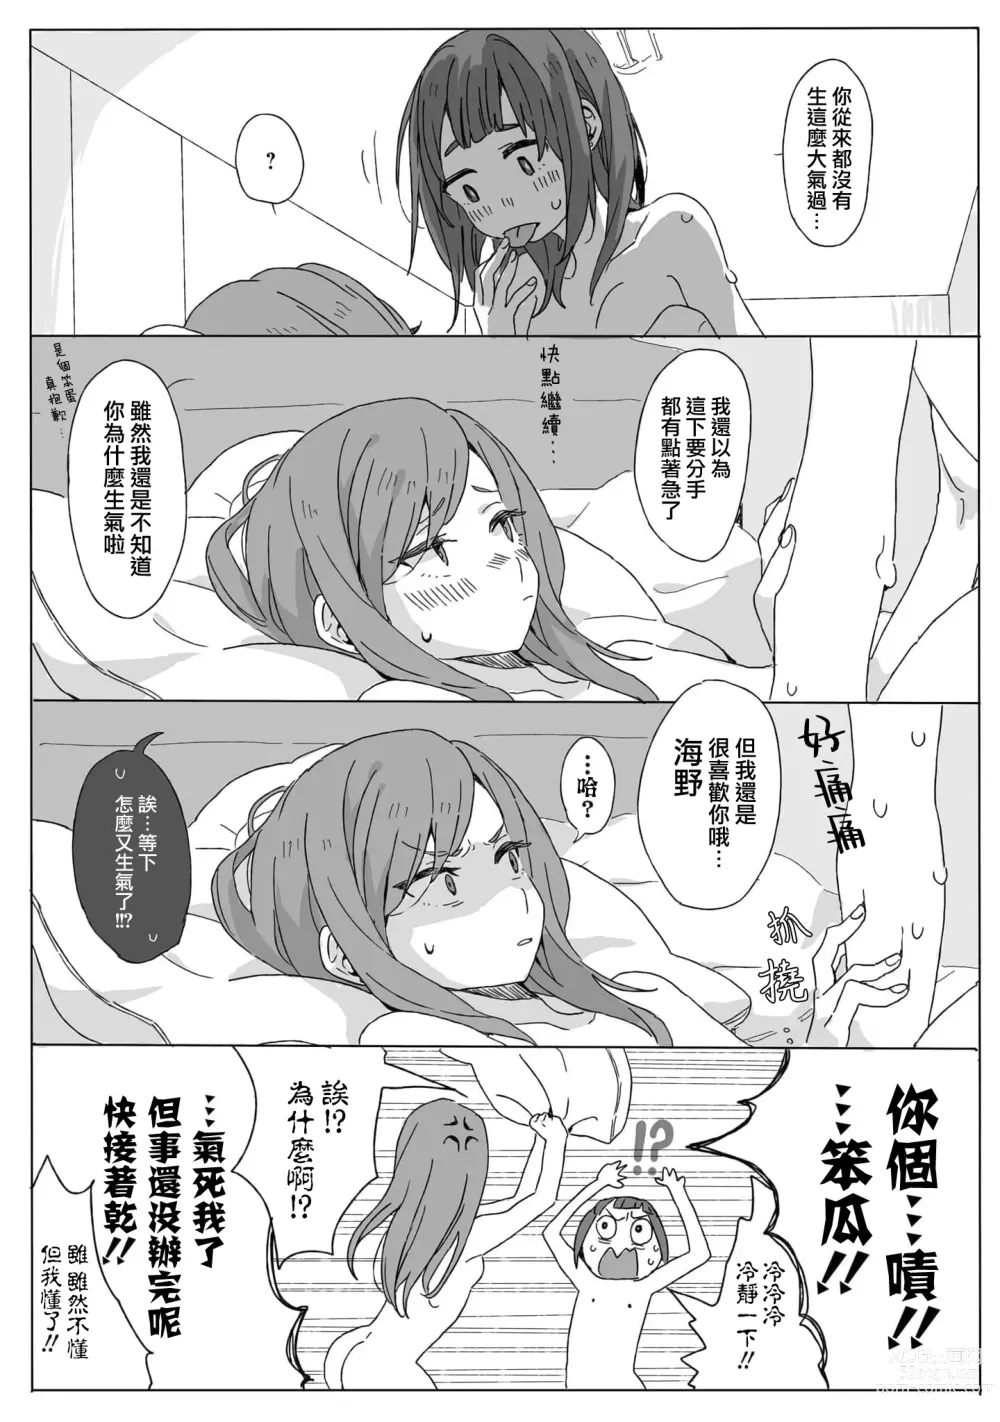 Page 10 of manga 山内小姐和海野小姐的回合。